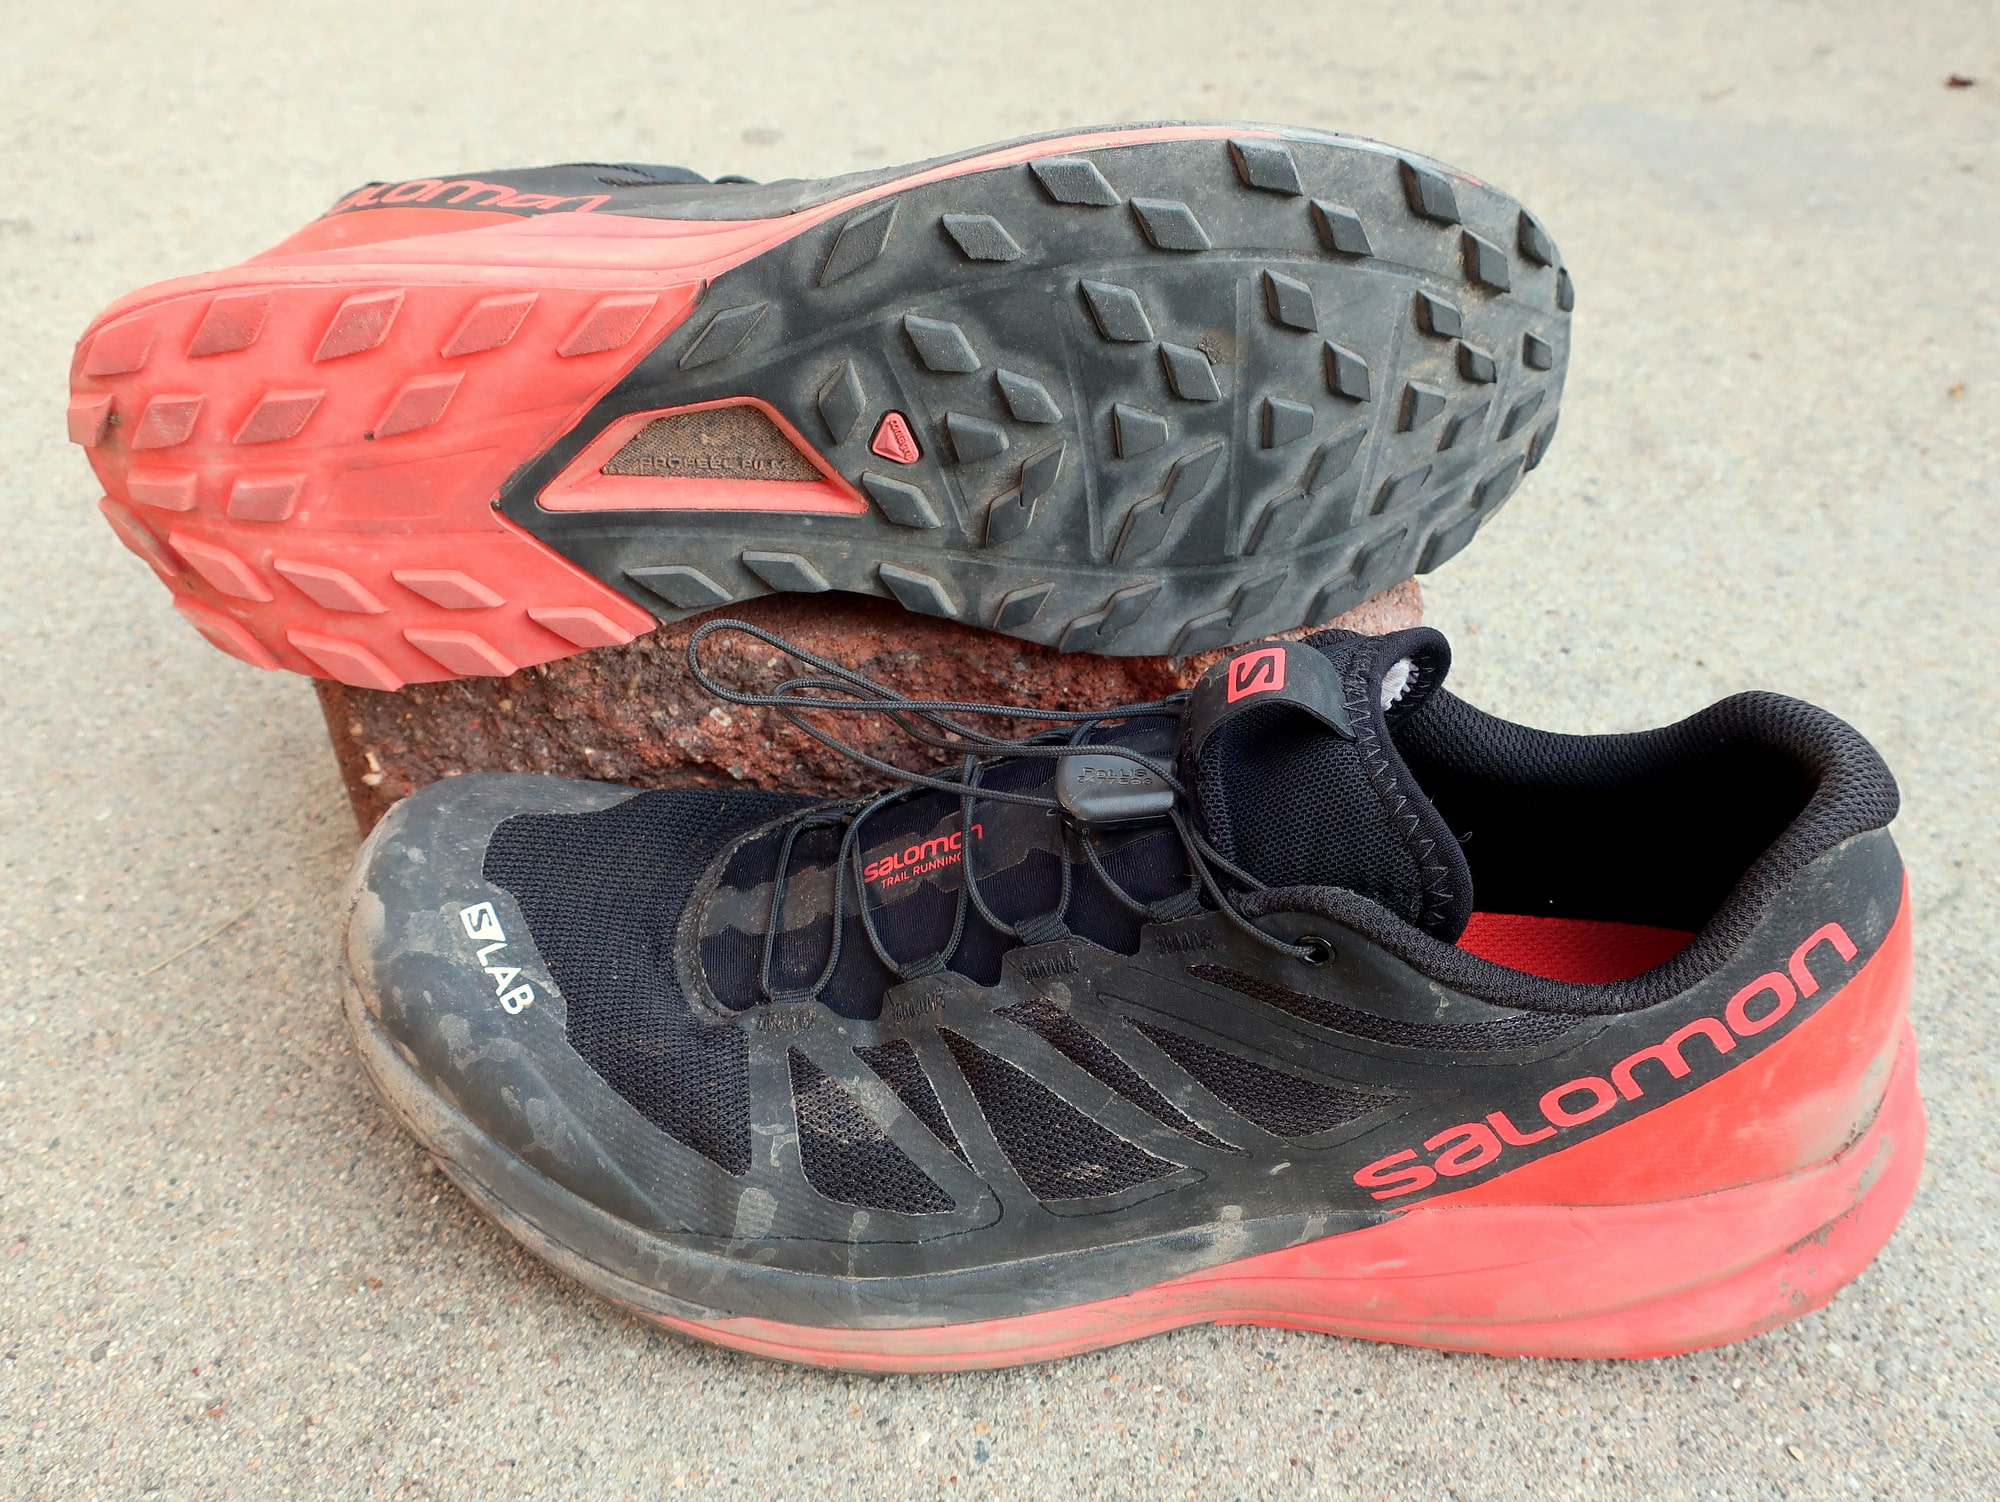 besteden Oom of meneer rand Review: Salomon S-Lab Sense Ultra || All-purpose trail running shoe